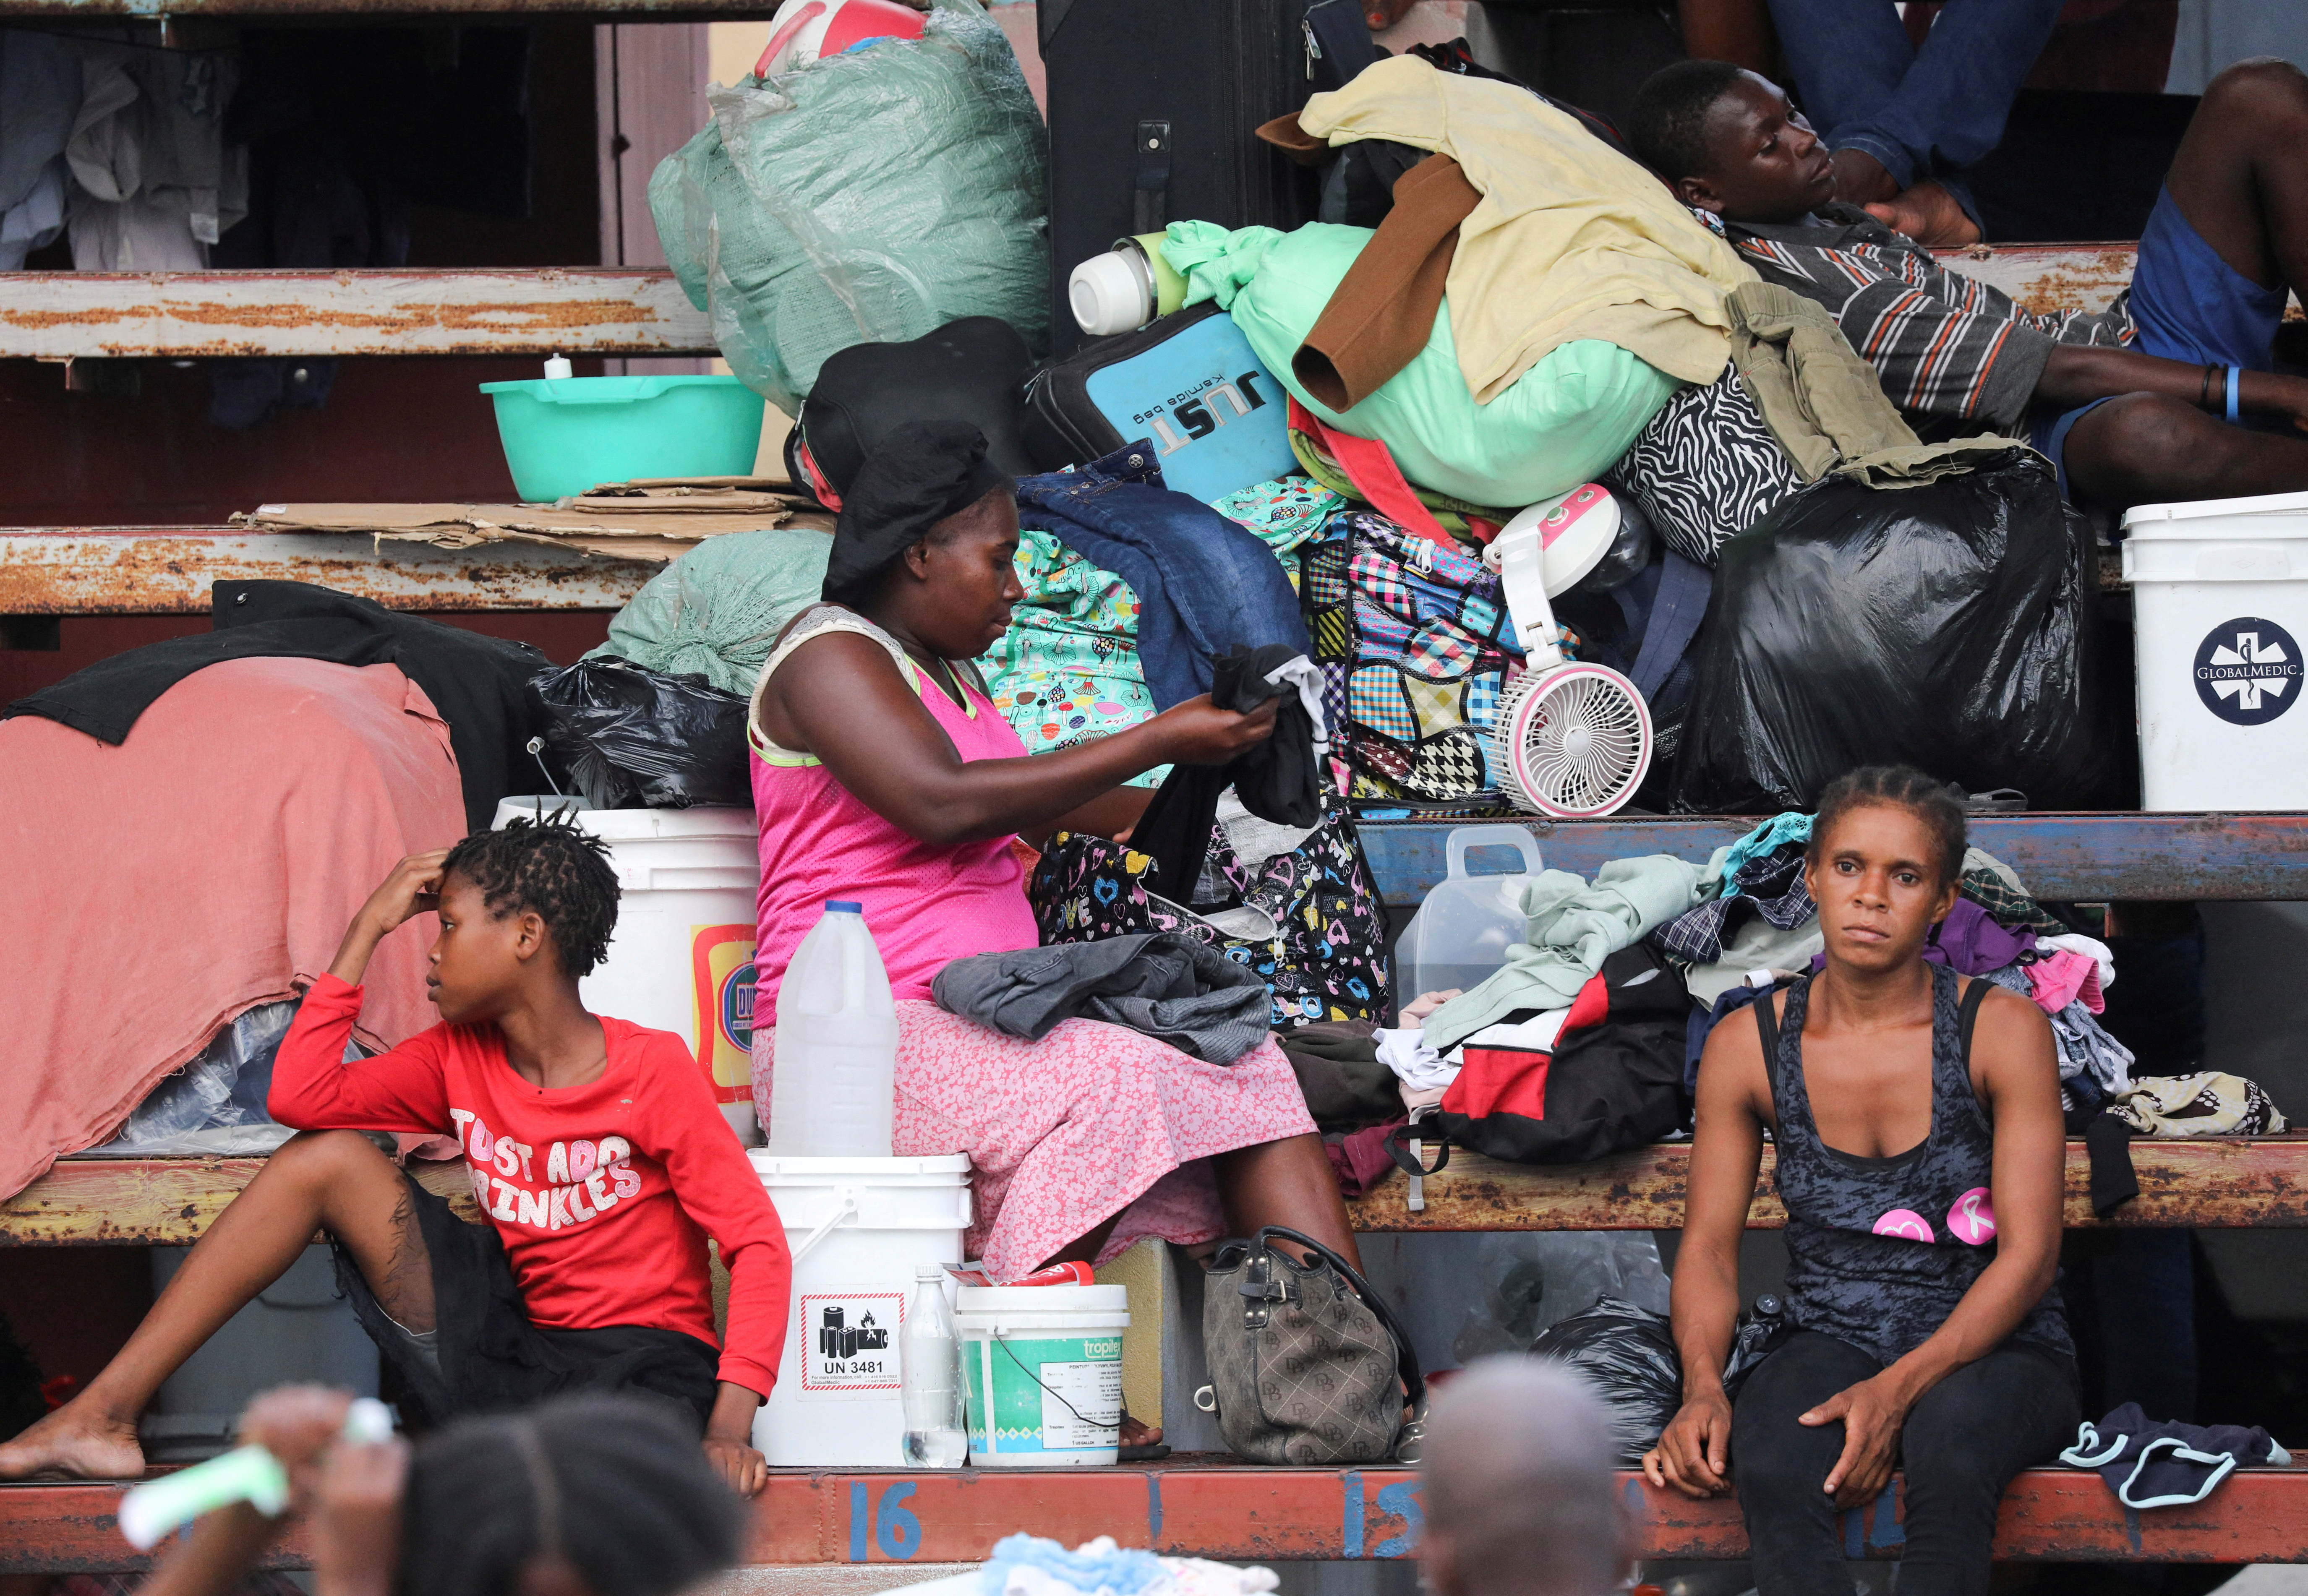 Haitians fleeing gang violence find shelter in a sport arena, in Port-au-Prince